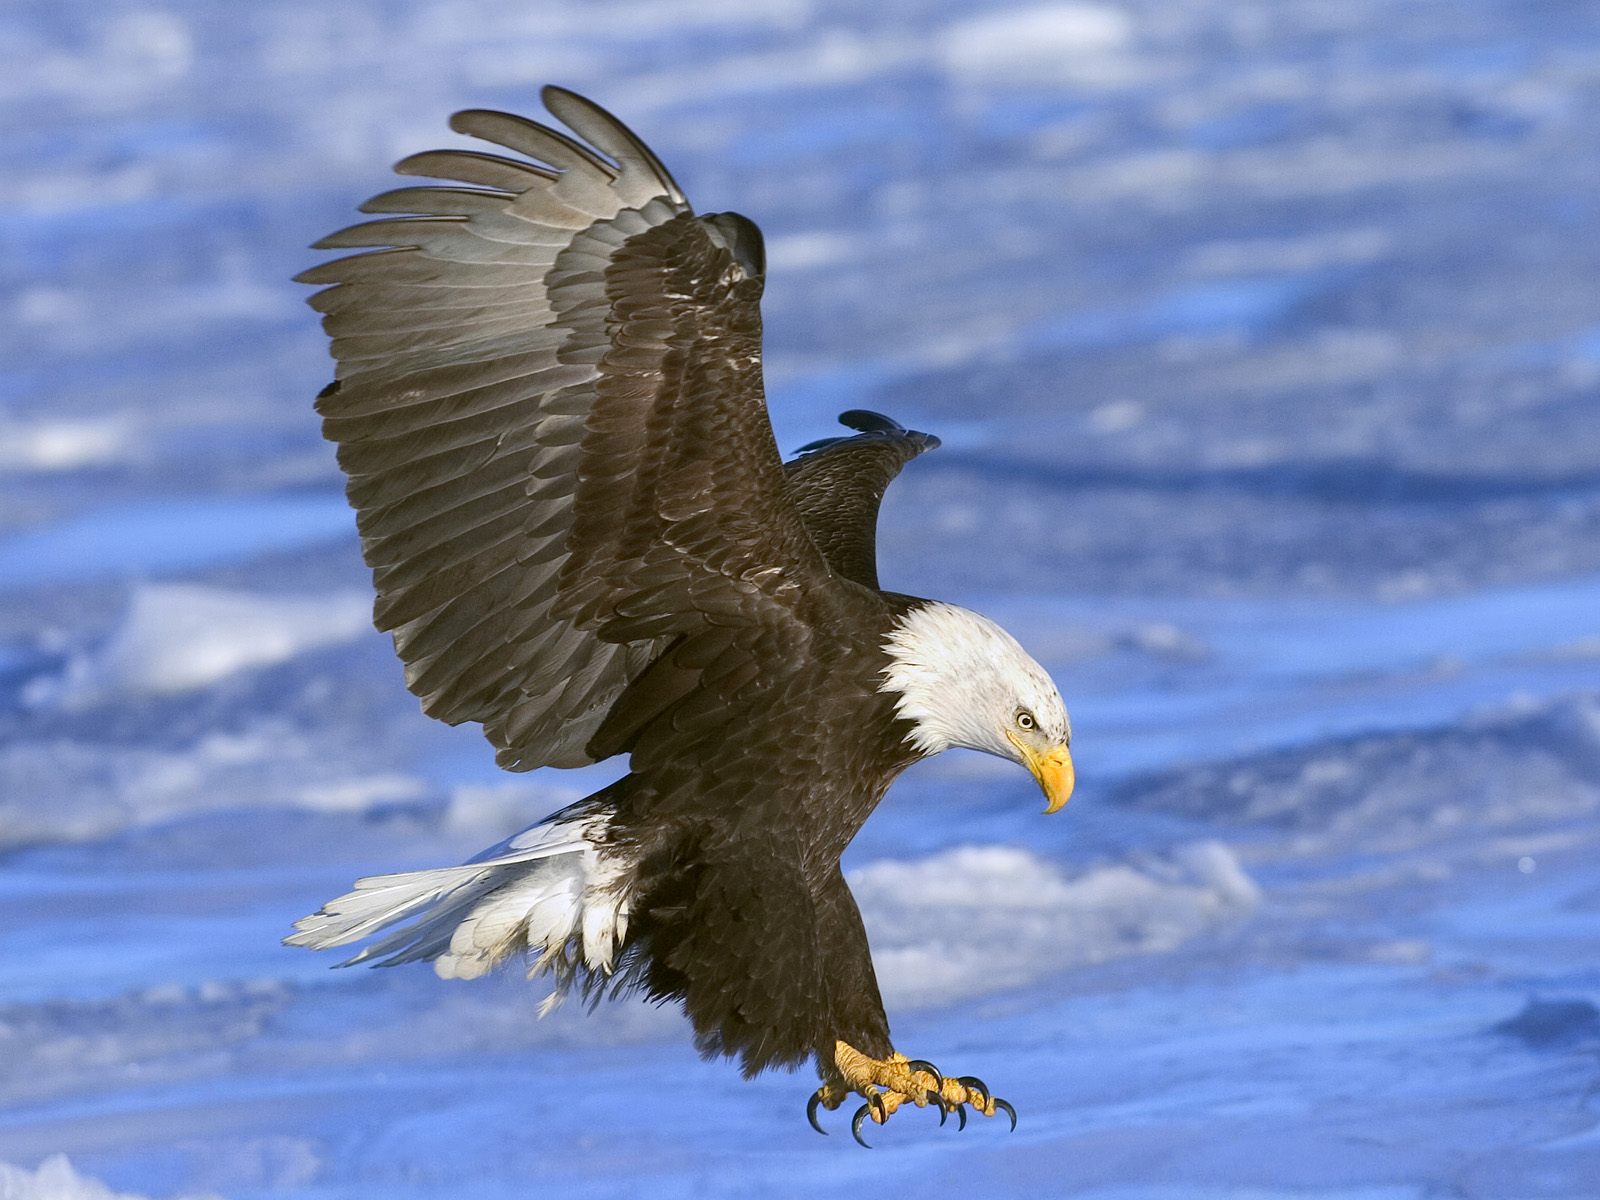 https://blogger.googleusercontent.com/img/b/R29vZ2xl/AVvXsEhhAgsjpqthiJKn7yVytheflWQRwXguFuMzaL40NoI0jHB5fibB6WSTZ6dF0uxutkAzp4pqGeSrMJ9gIJmwyO7F4McMKcFWKhbNpHP6NzjyQFScfxLIzjGLUuGhg9da0sLC5pcWPb4s_bE/s1600/Bald+Eagle+in+Flight%252C+Alaska.jpg